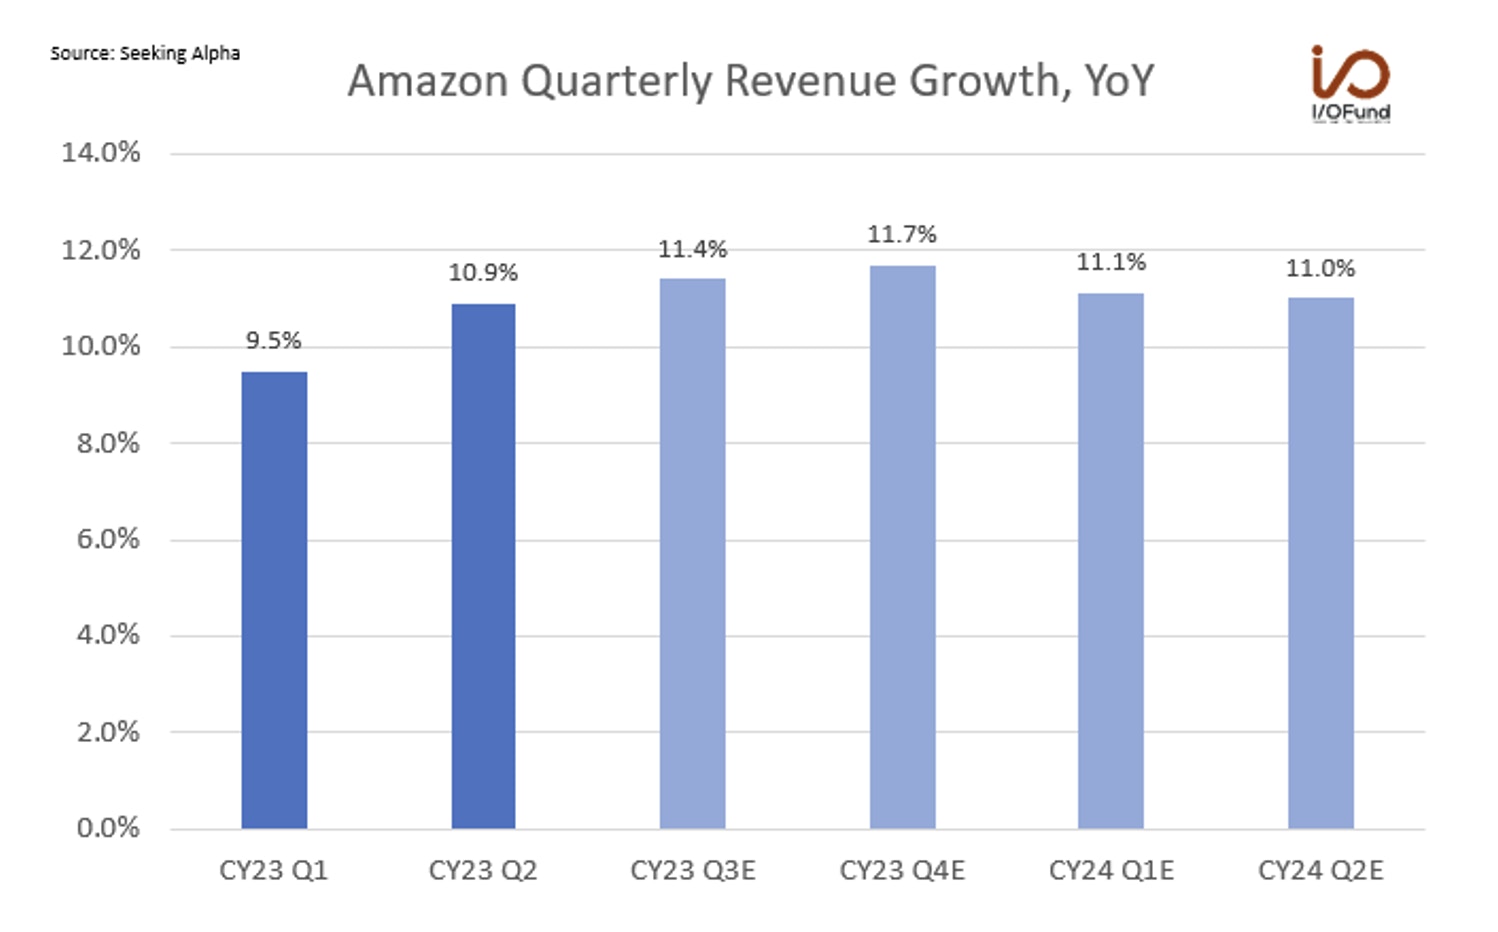 Amazon Quarterly Revenue Growth, YoY